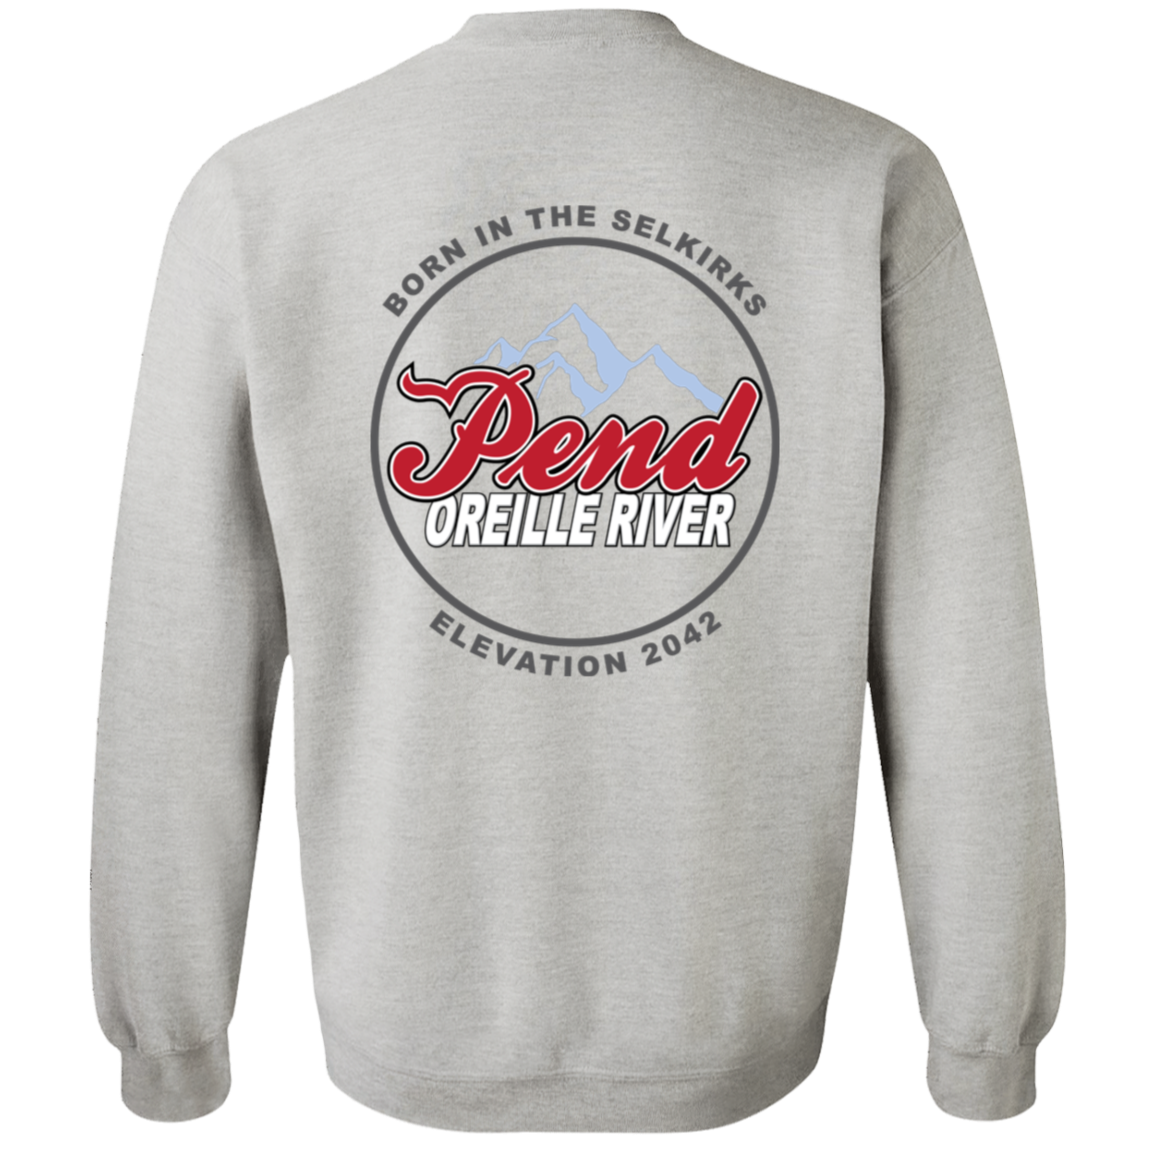 Silver Bullet (Front & Back) Sweatshirt